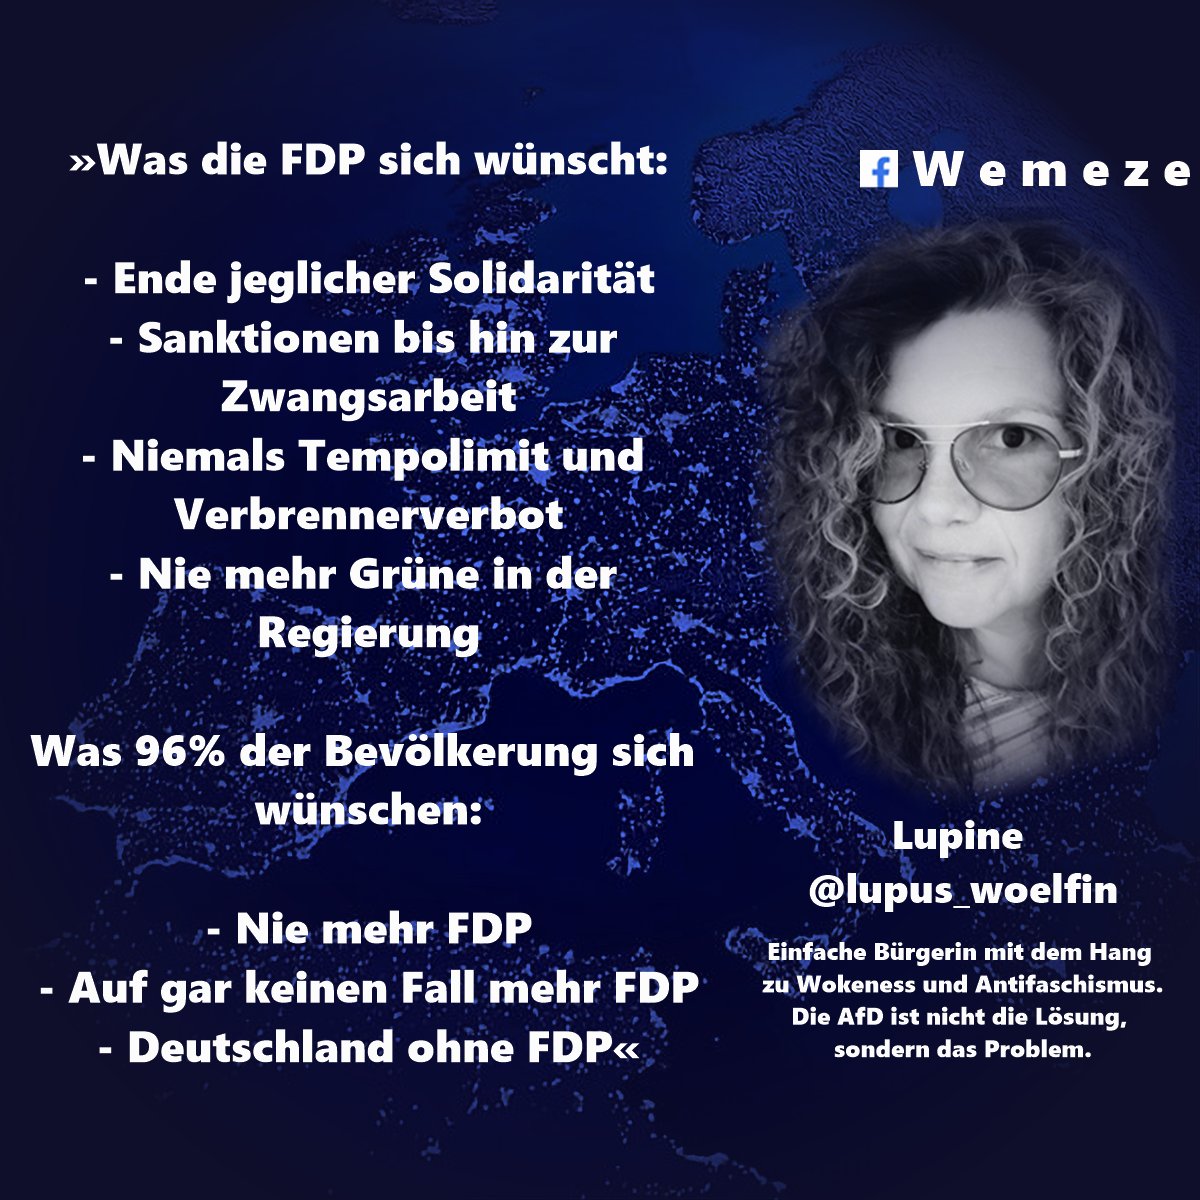 #FDP @lupus_woelfin